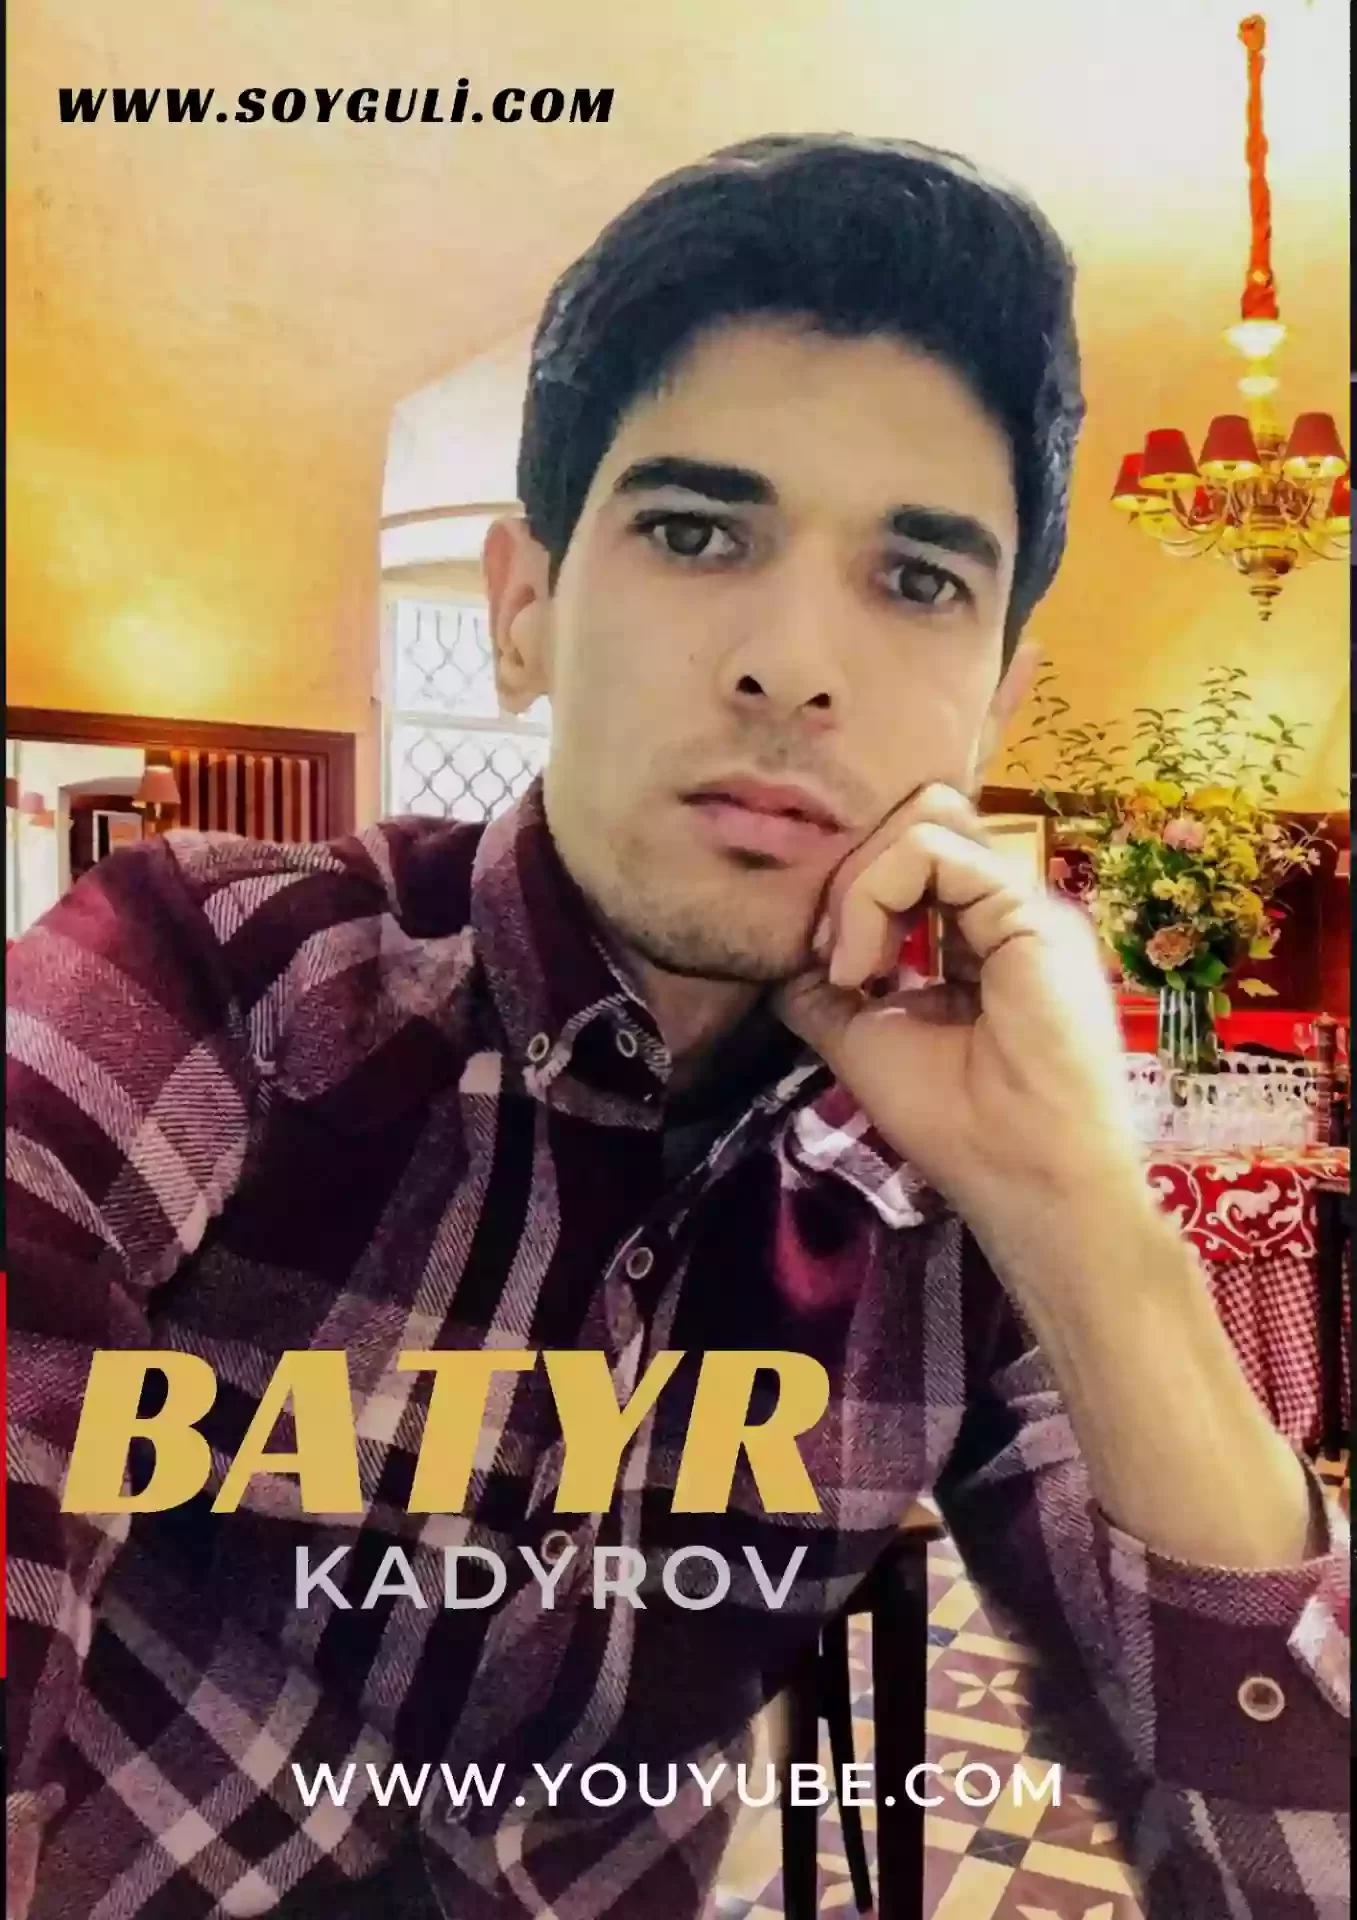 Batyr Kadyrow - Bagysla (Dj yazzo rmx)